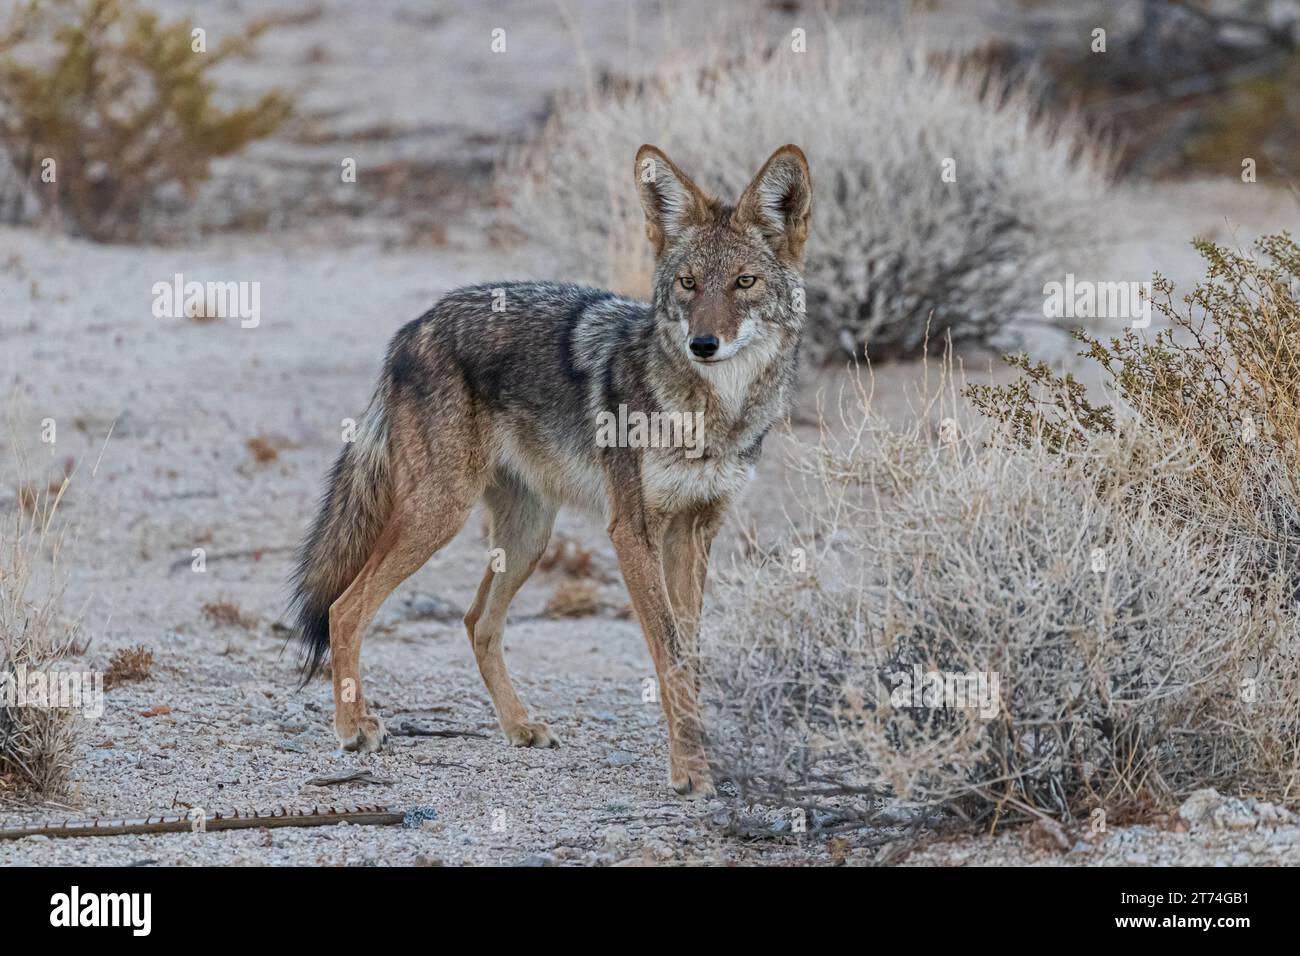 Coyote in the wild in the desert Stock Photo